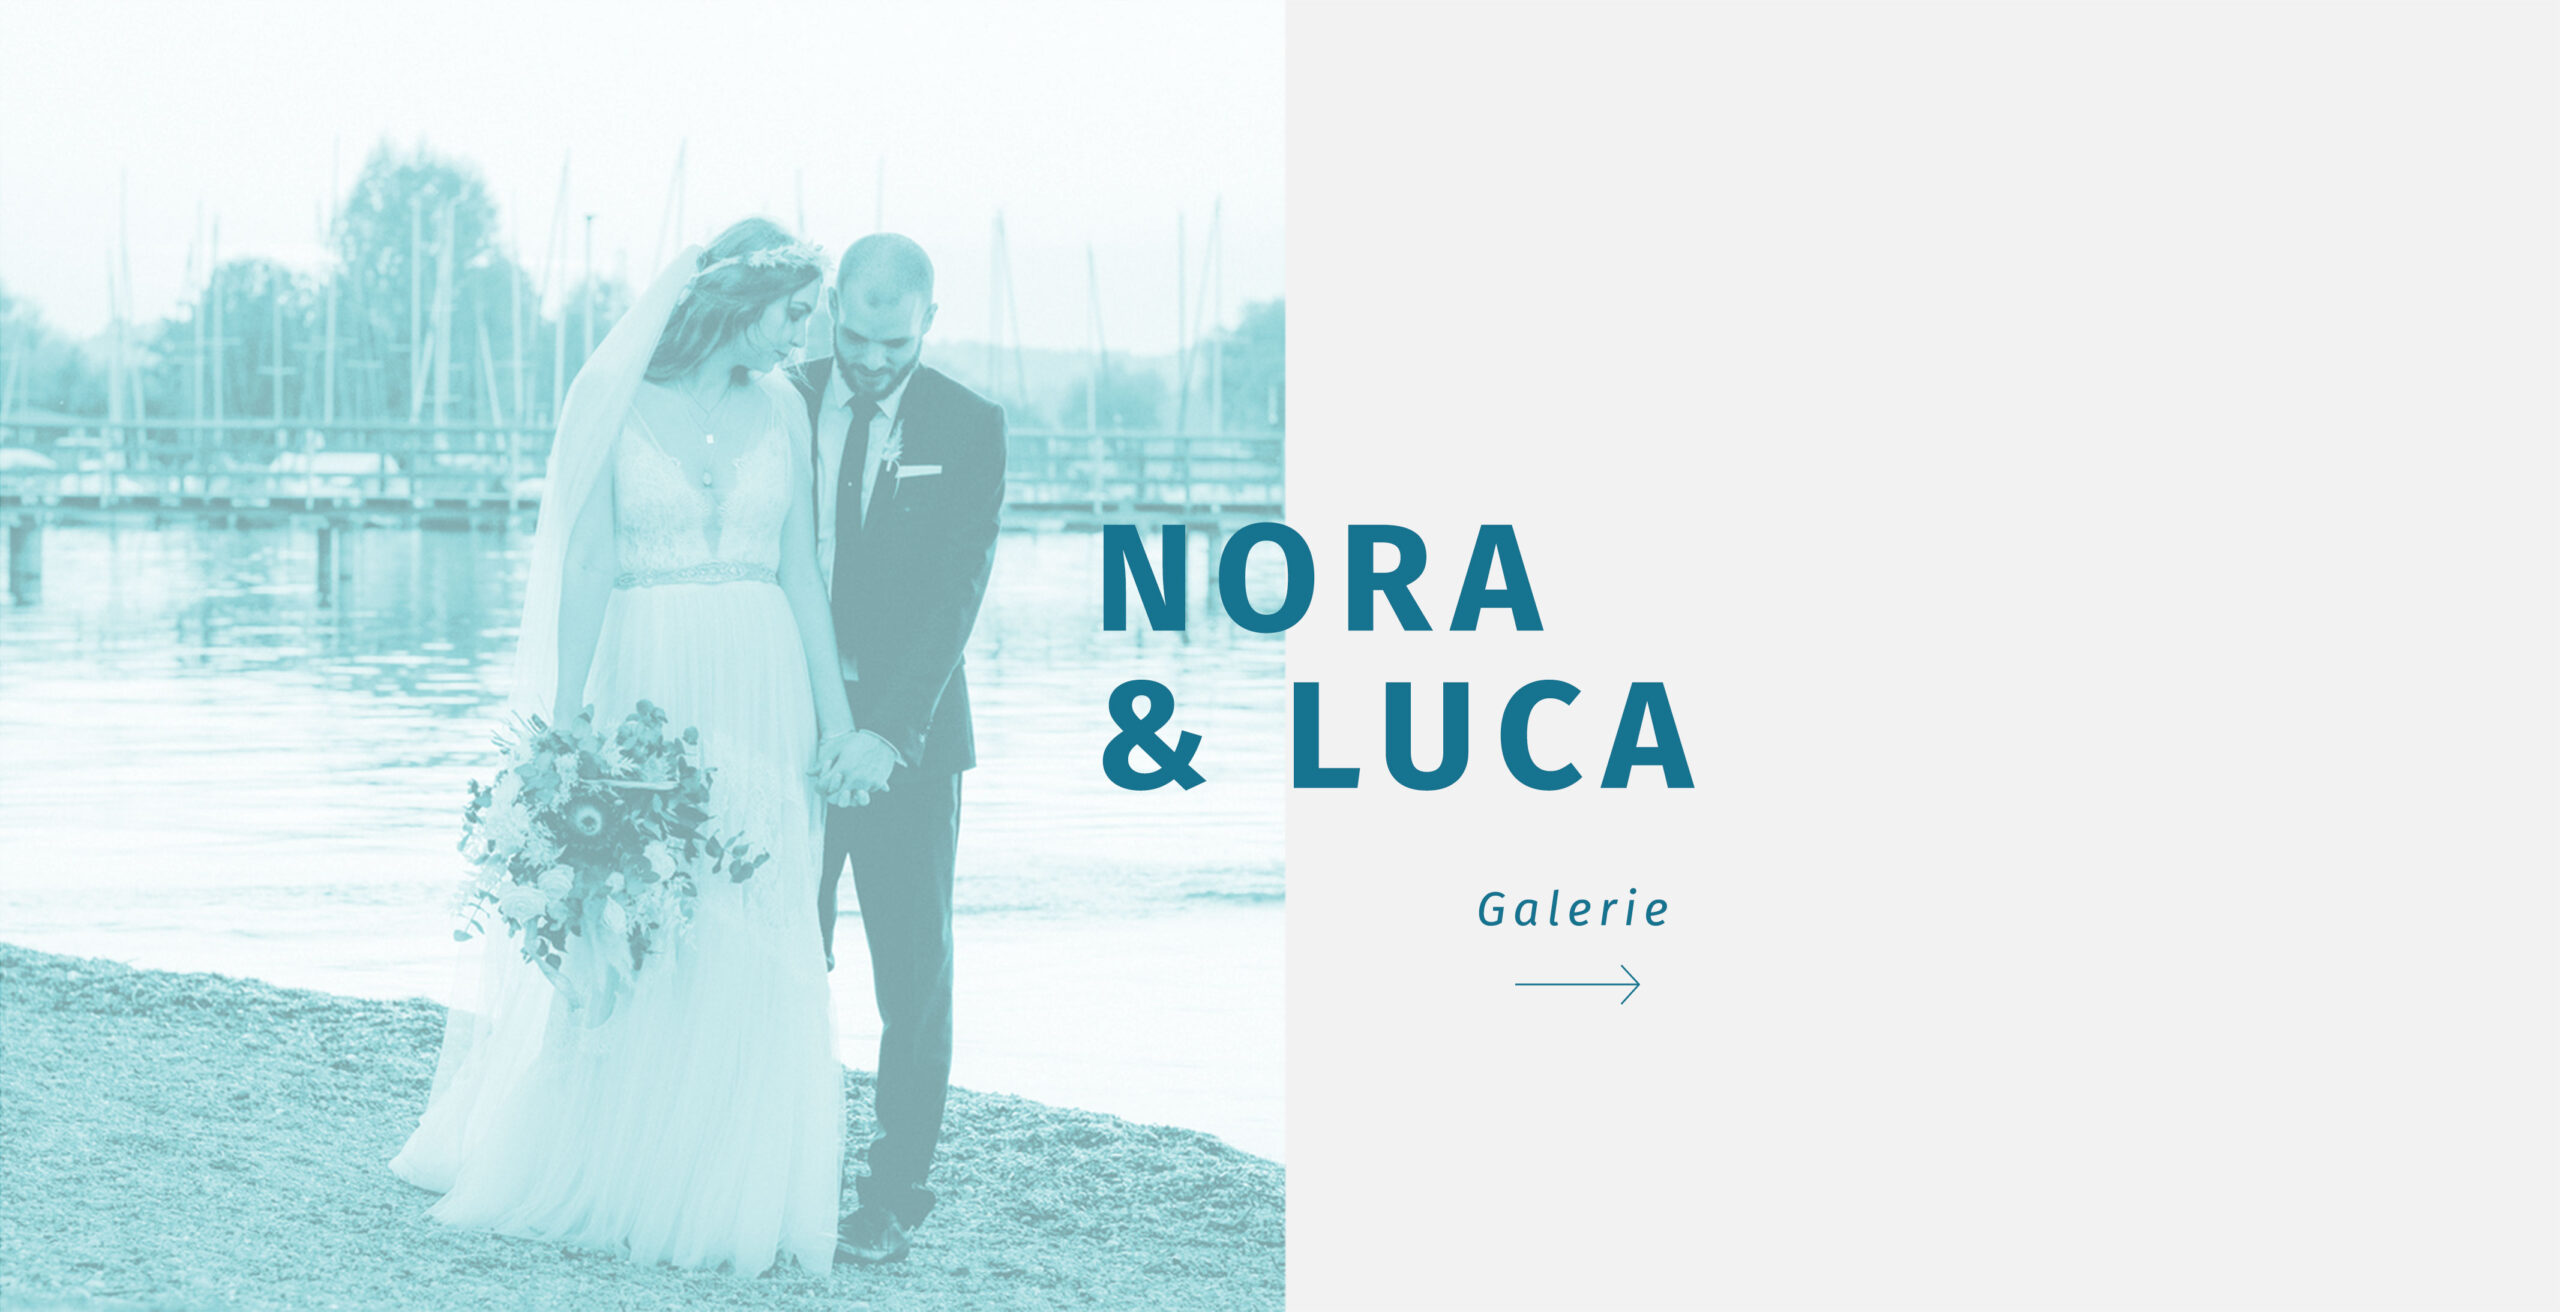 Nora & Luca